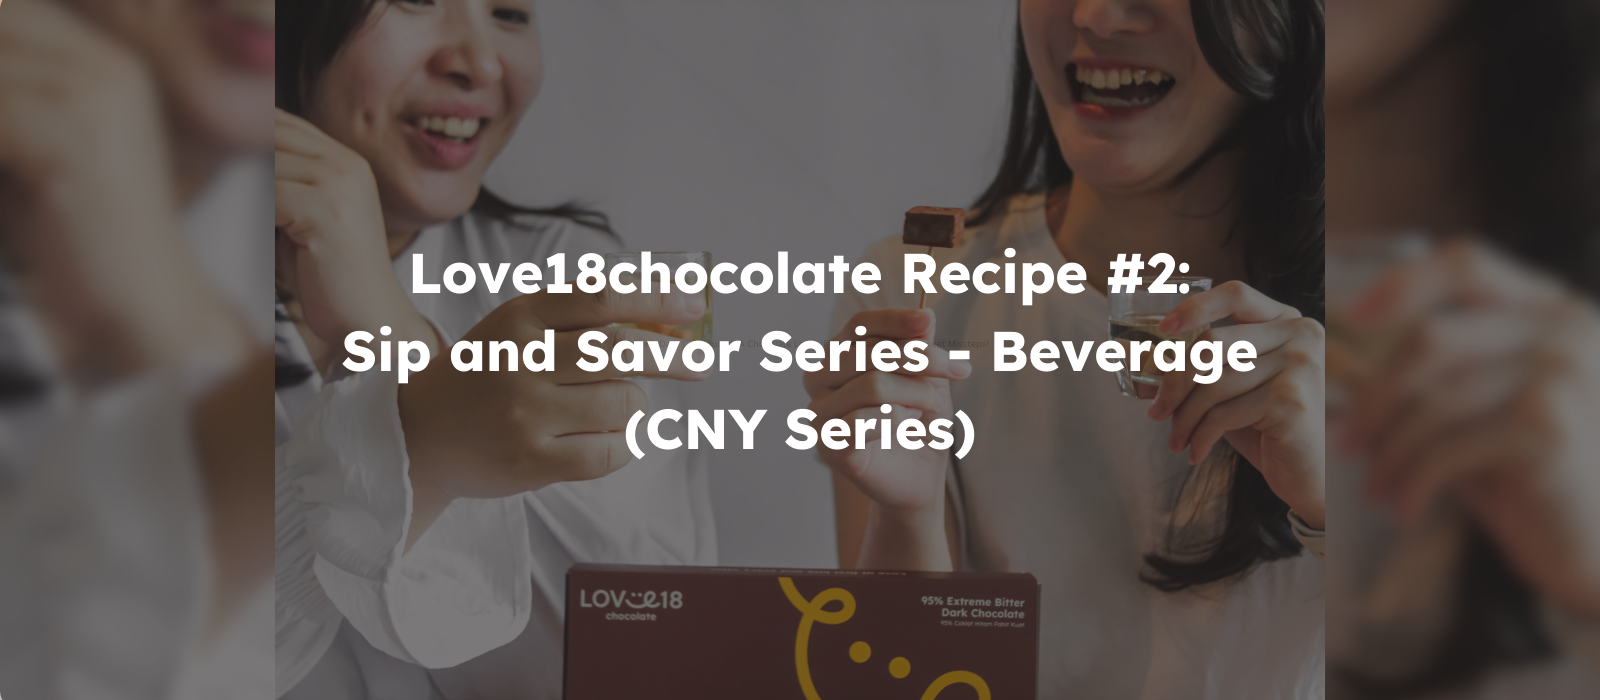 Love18chocolate Recipe #2: Sip and Savor Series (Beverage)